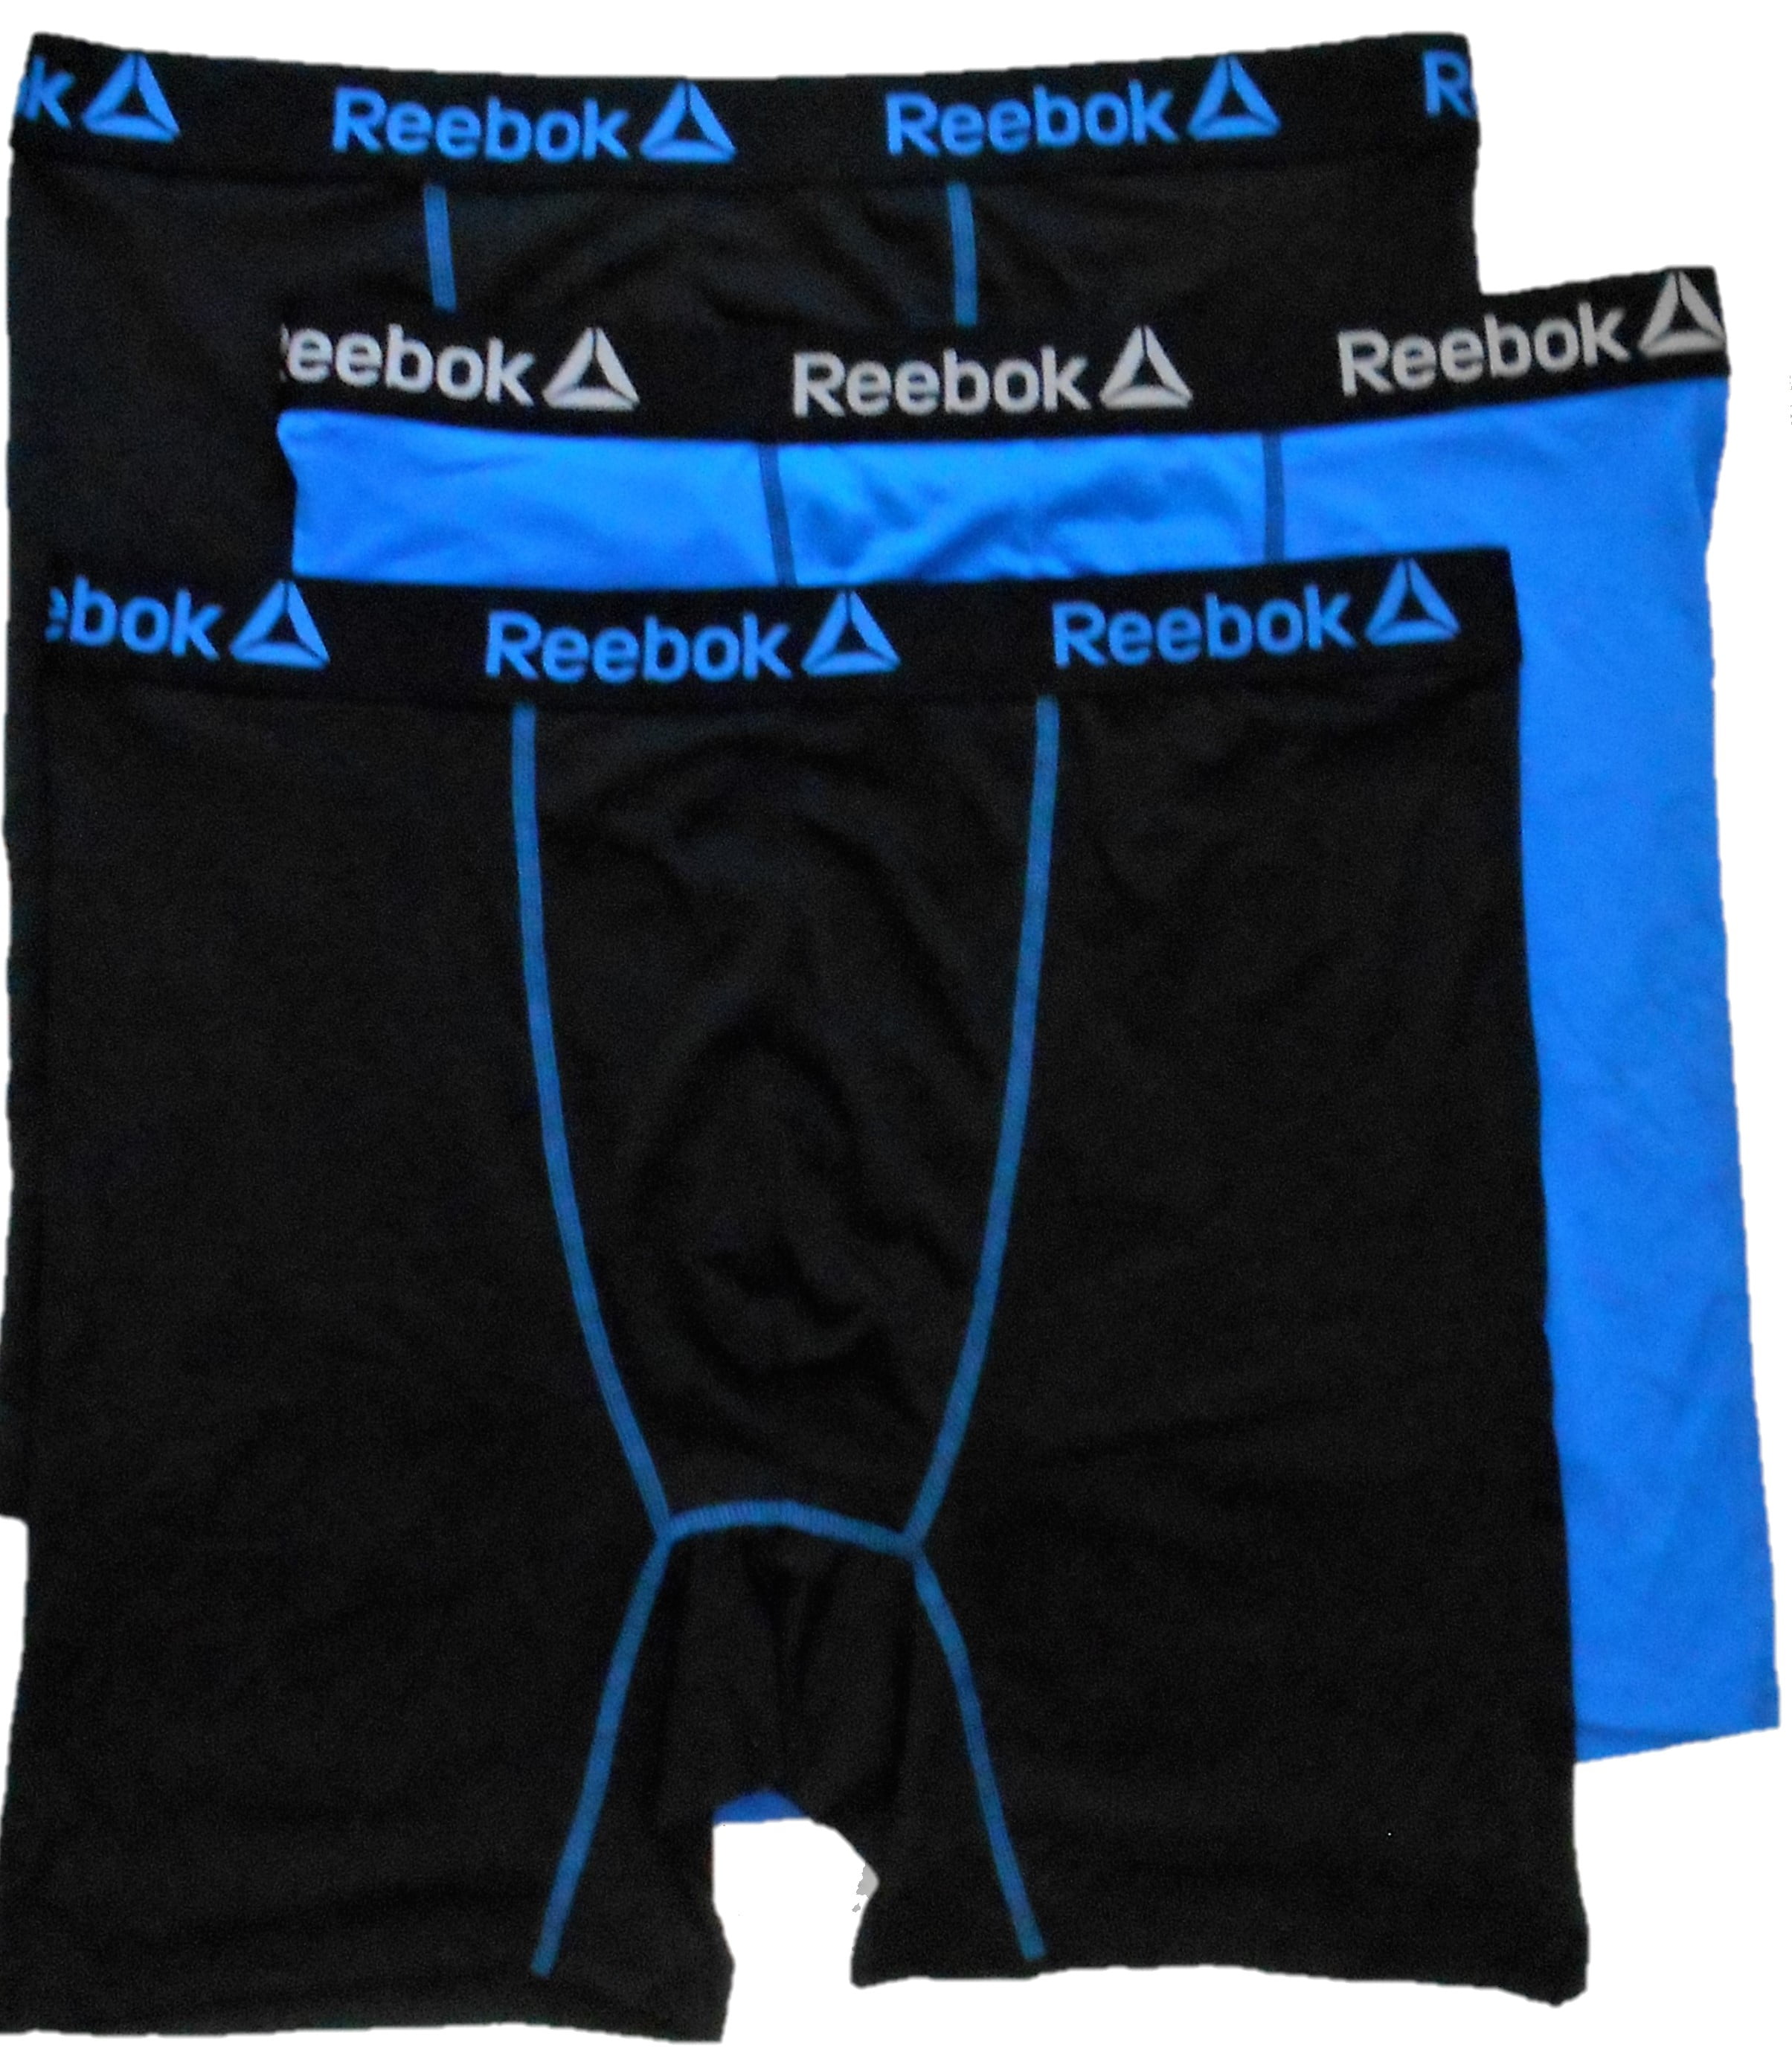 Details about   Reebok Men's 3 Pack Stretch Perform Boxer Briefs with Contour Pouch Size L or XL